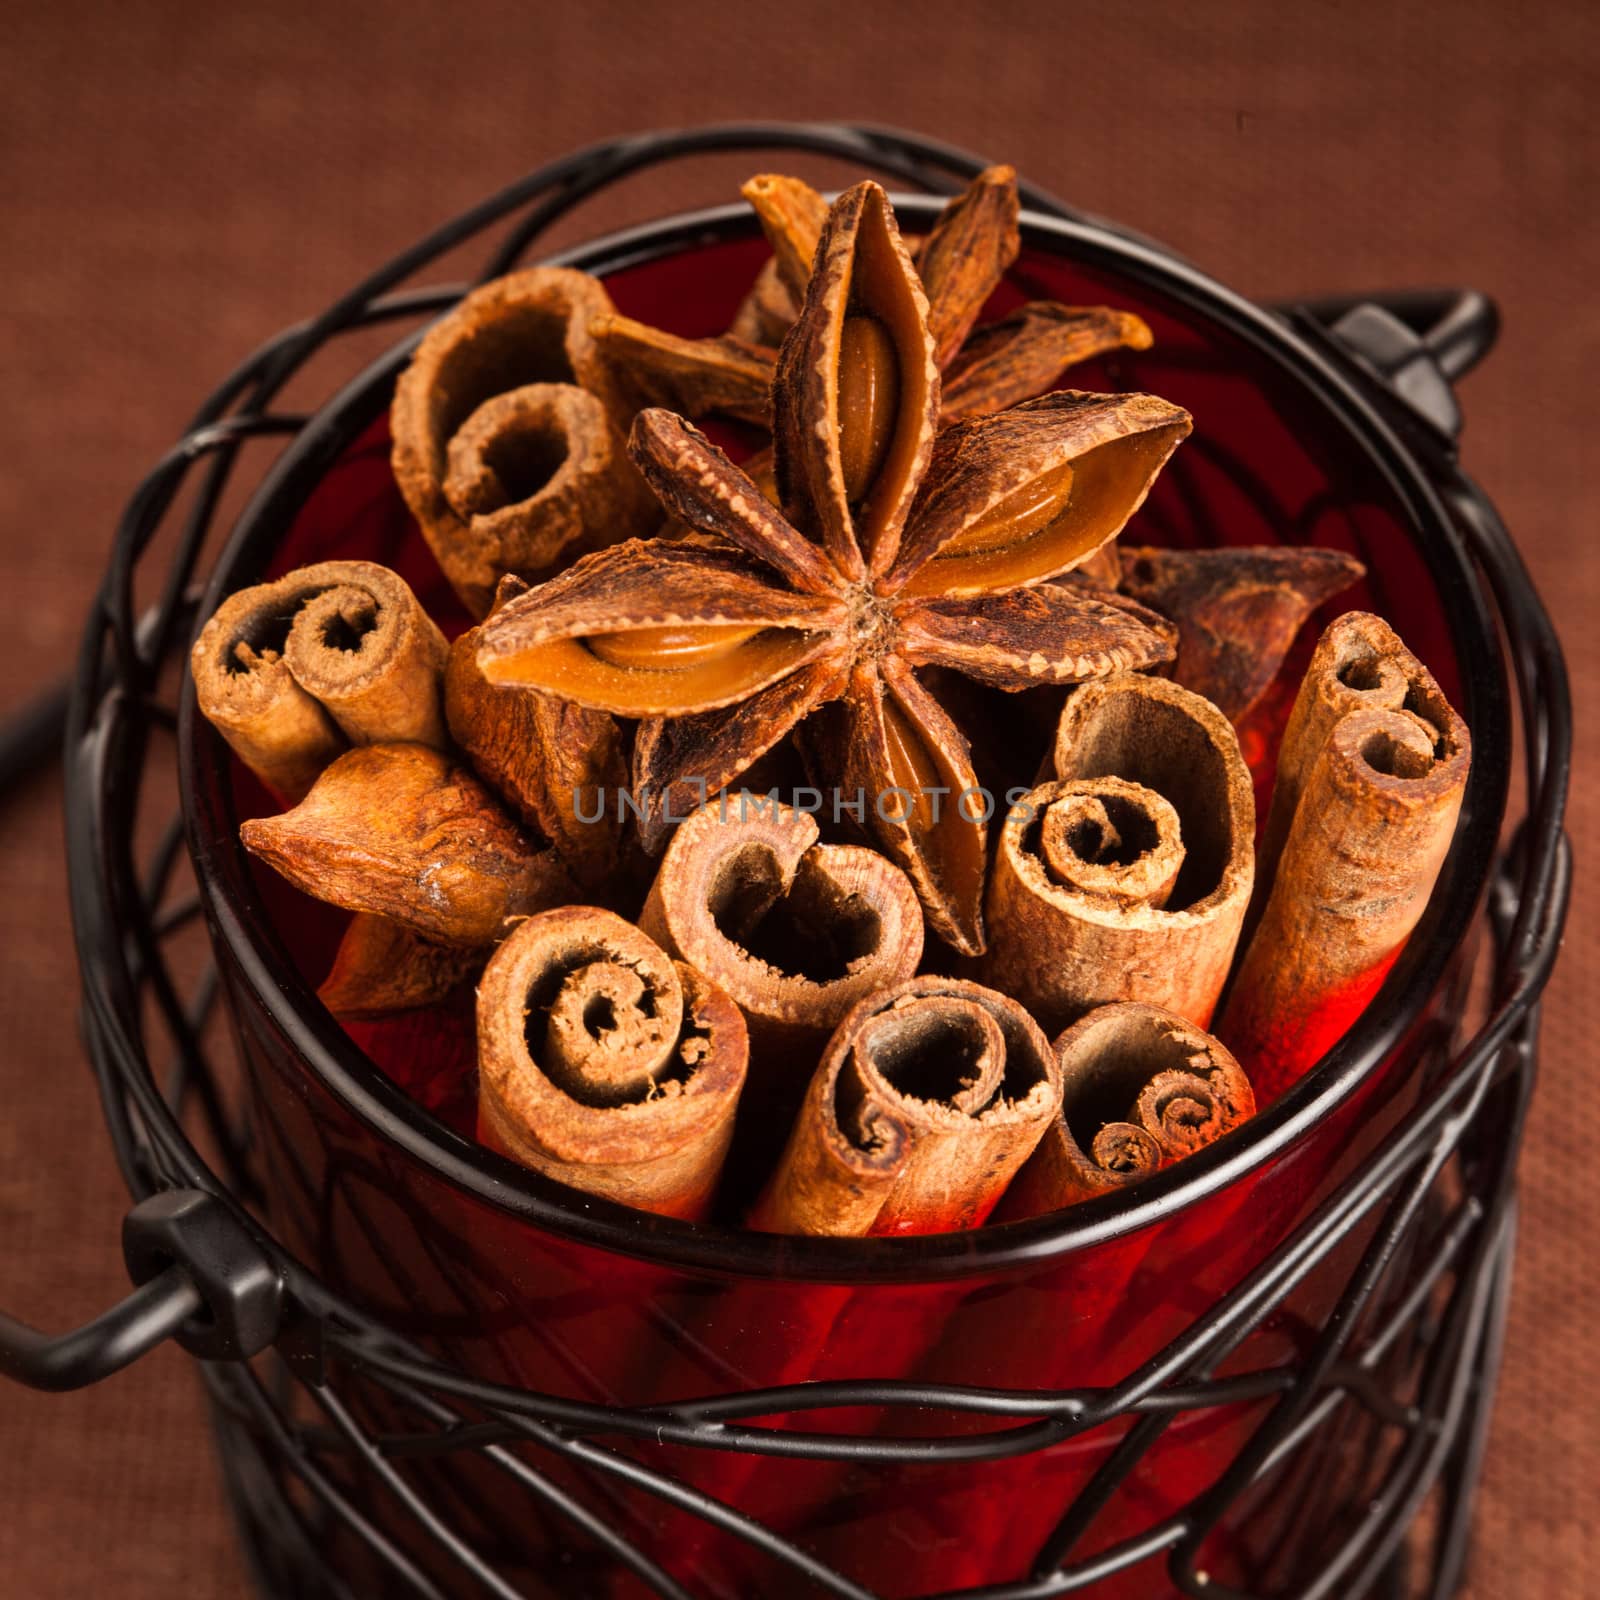 Cinnamon sticks and anise stars by oksix